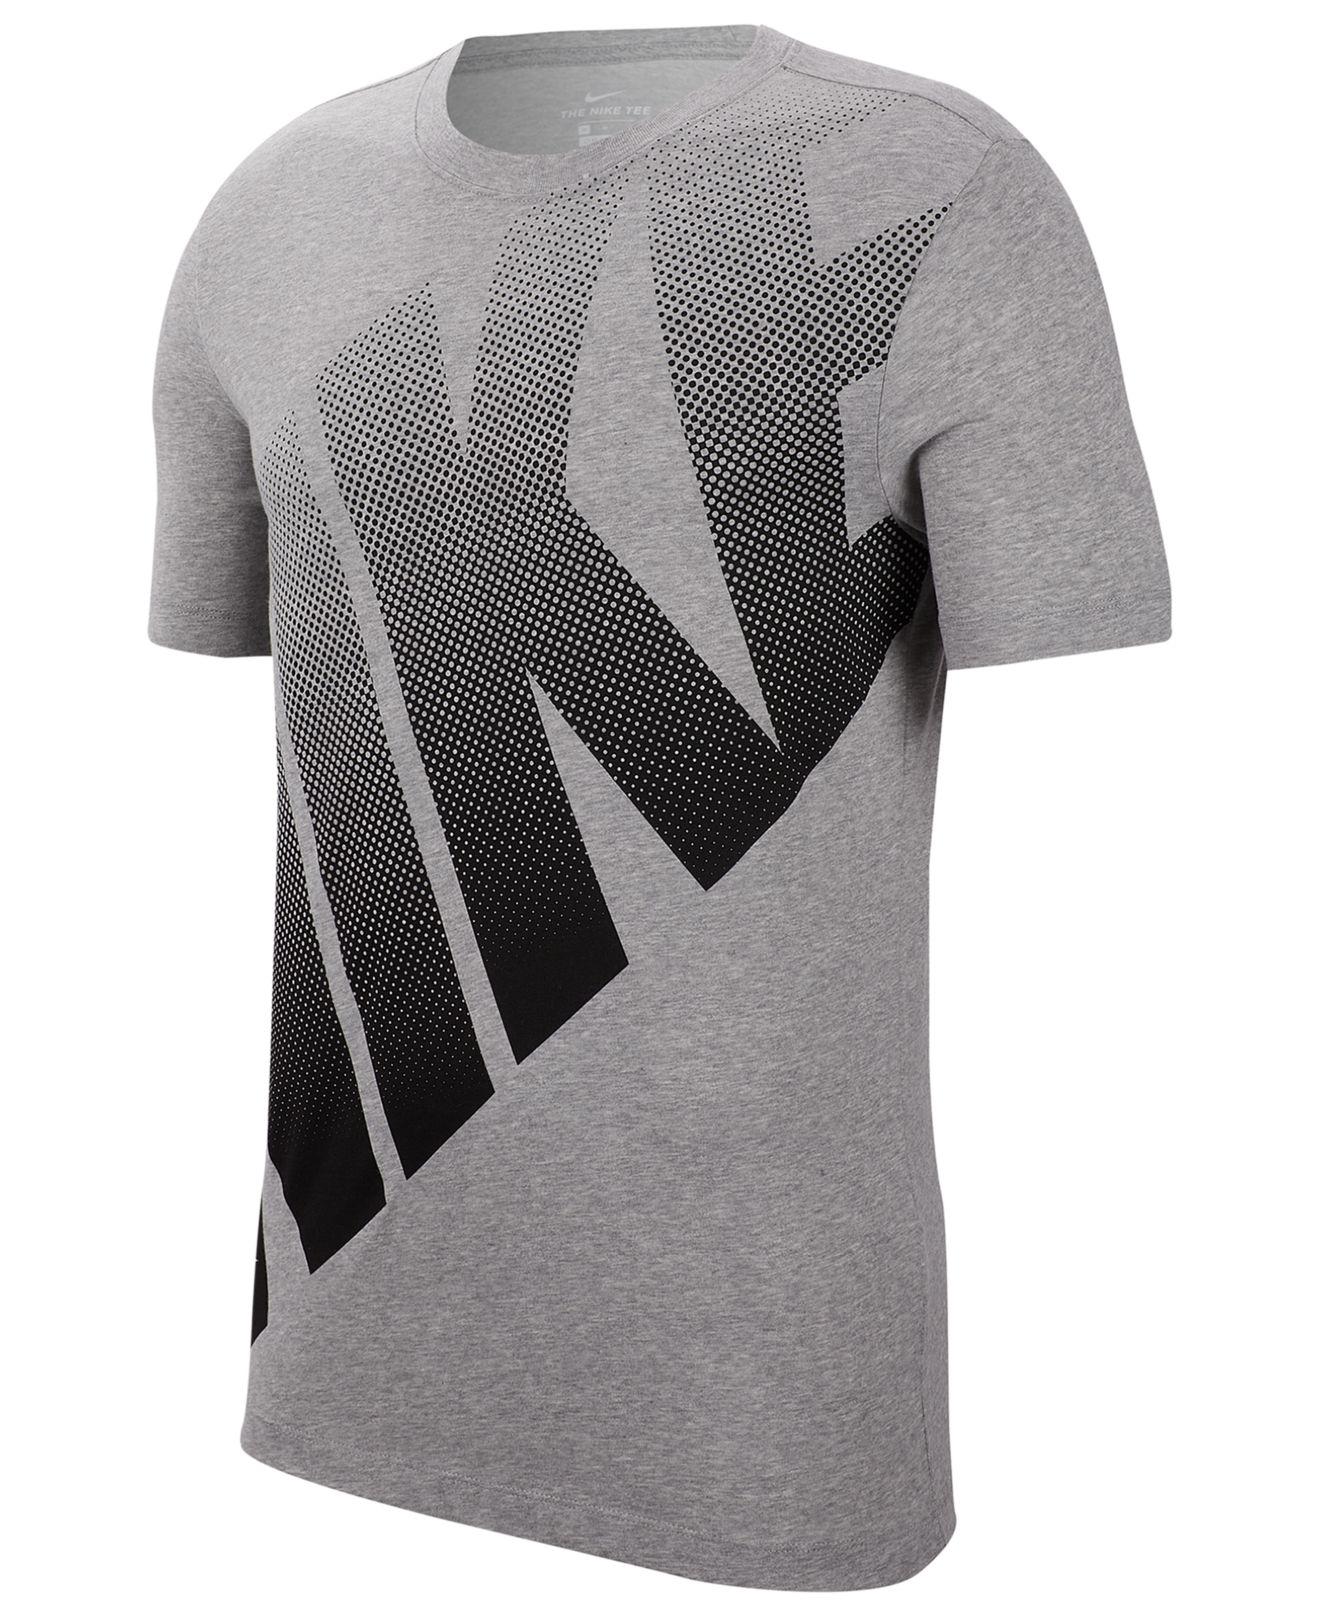 Nike Cotton Dri-fit Logo T-shirt in Dark Grey Heather (Gray) for Men - Lyst